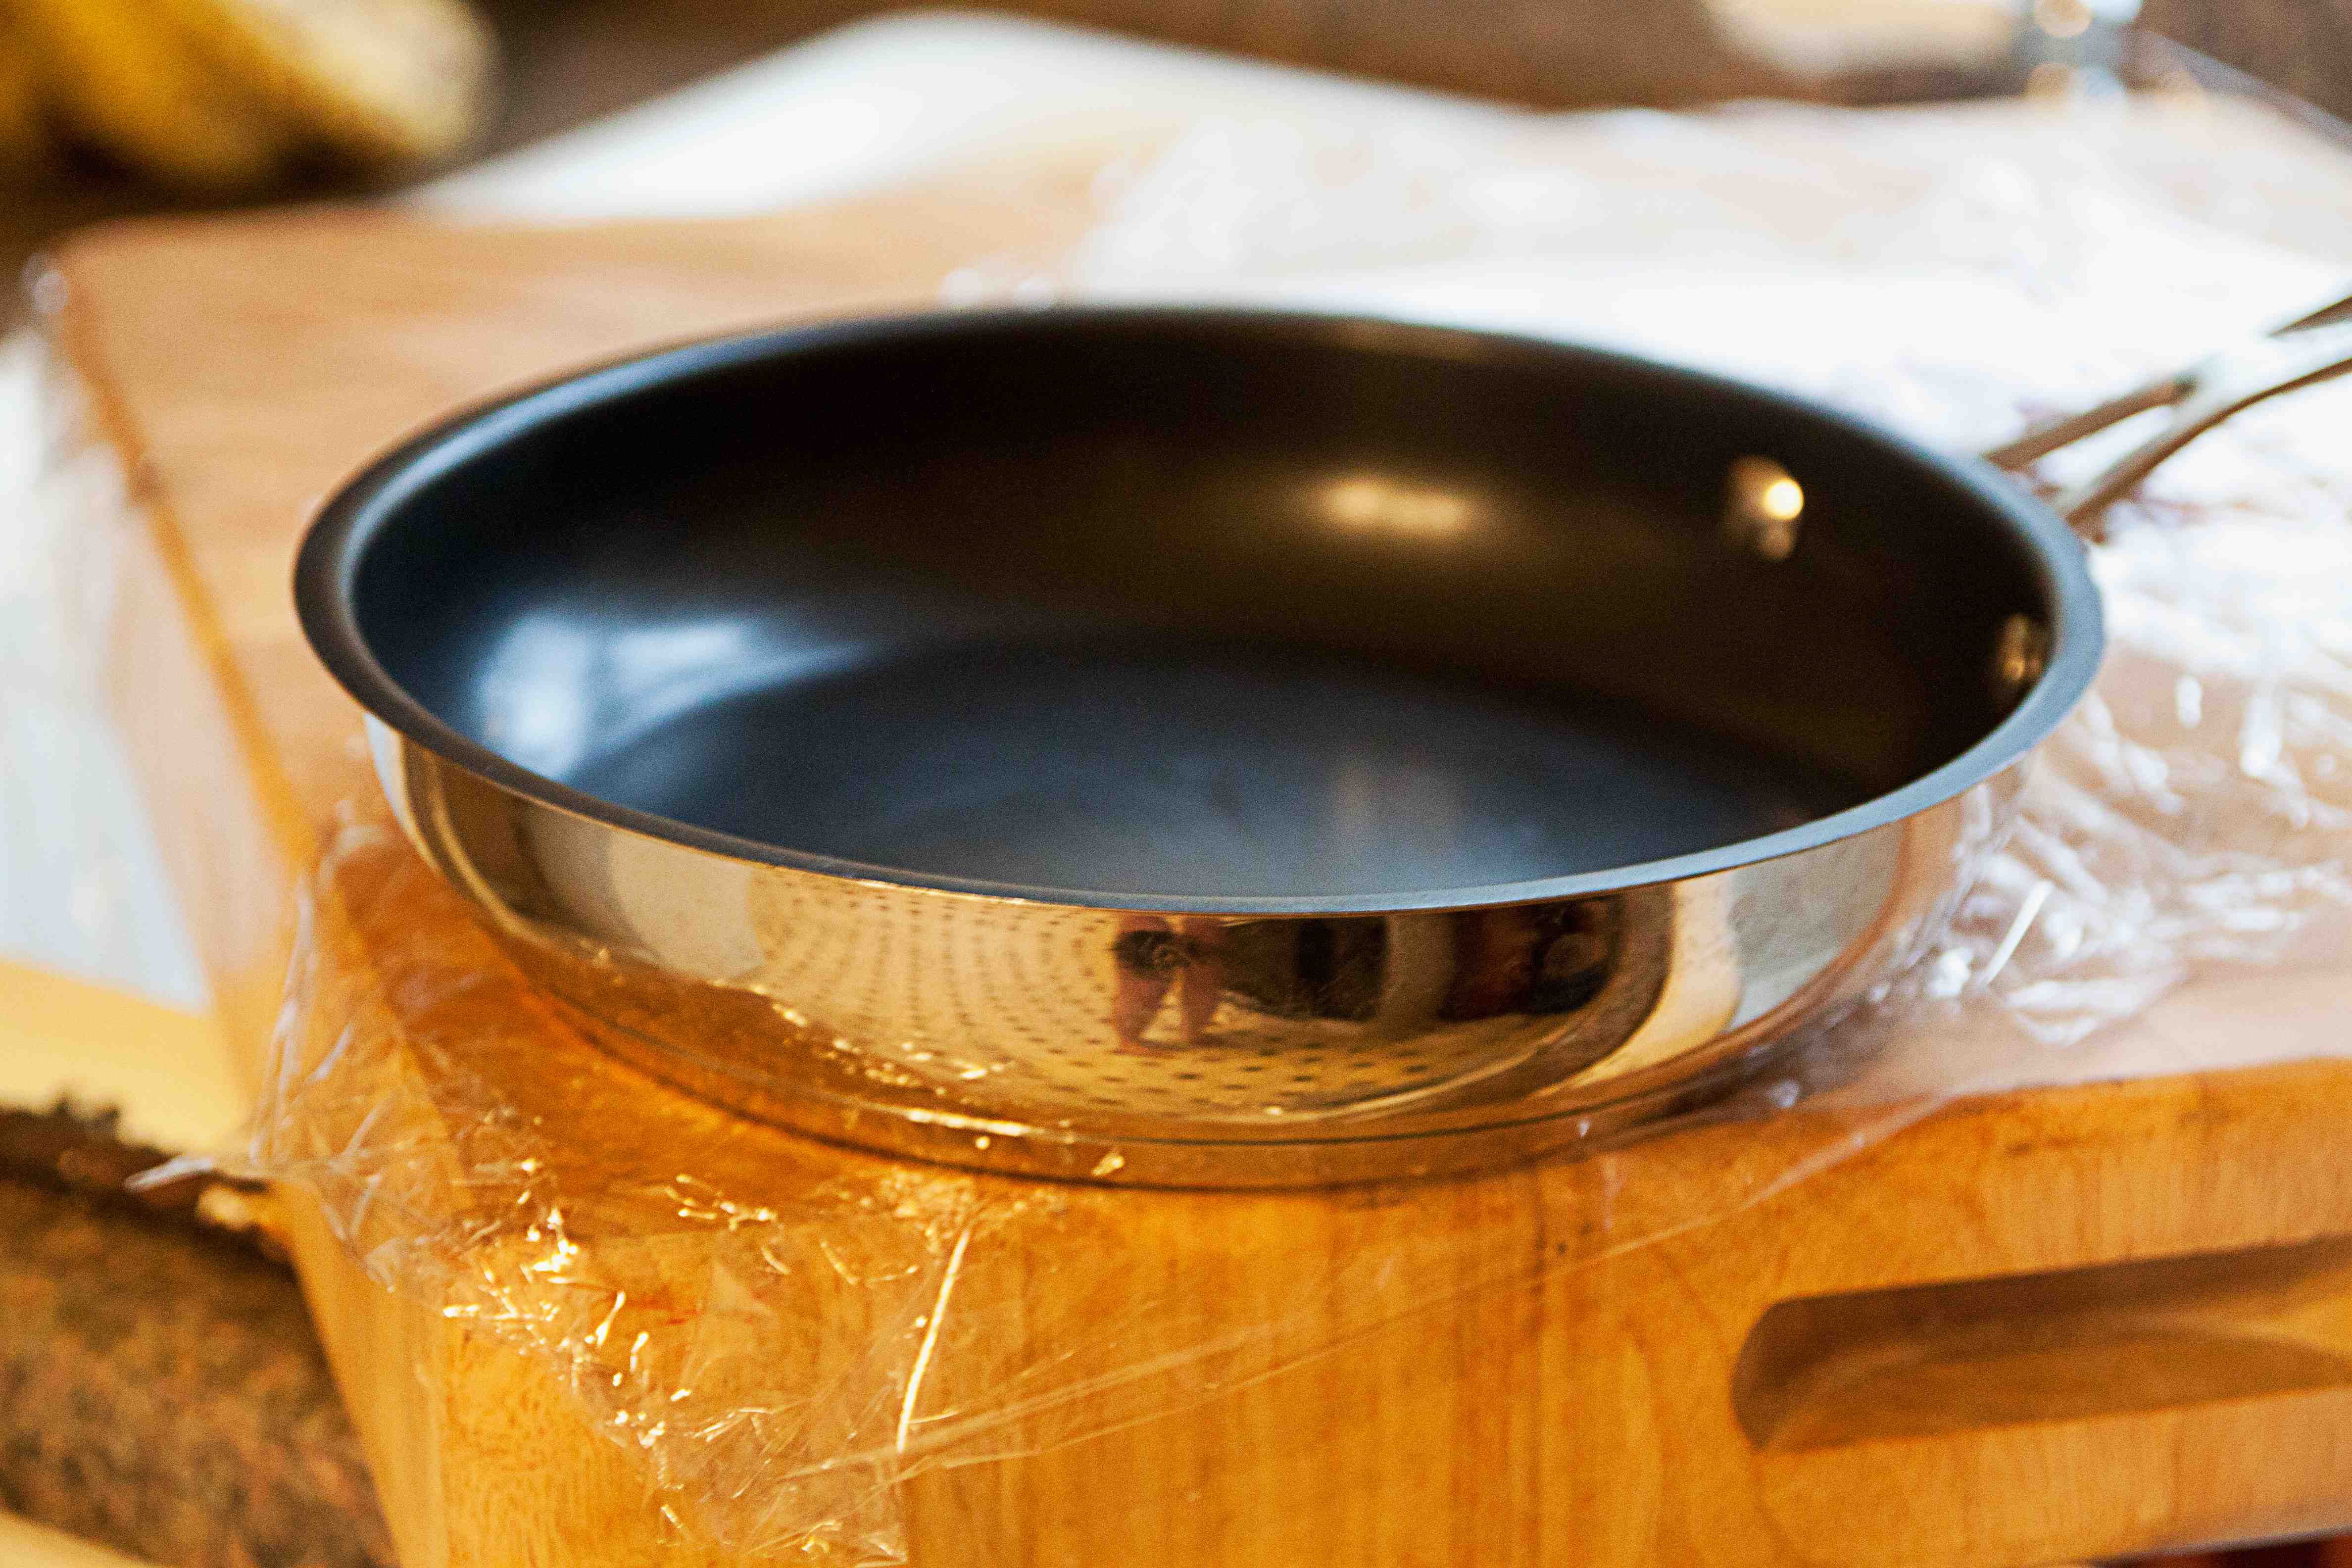 Inside Helana's Kitchen: Cuisinart Nonstick Stainless-Steel